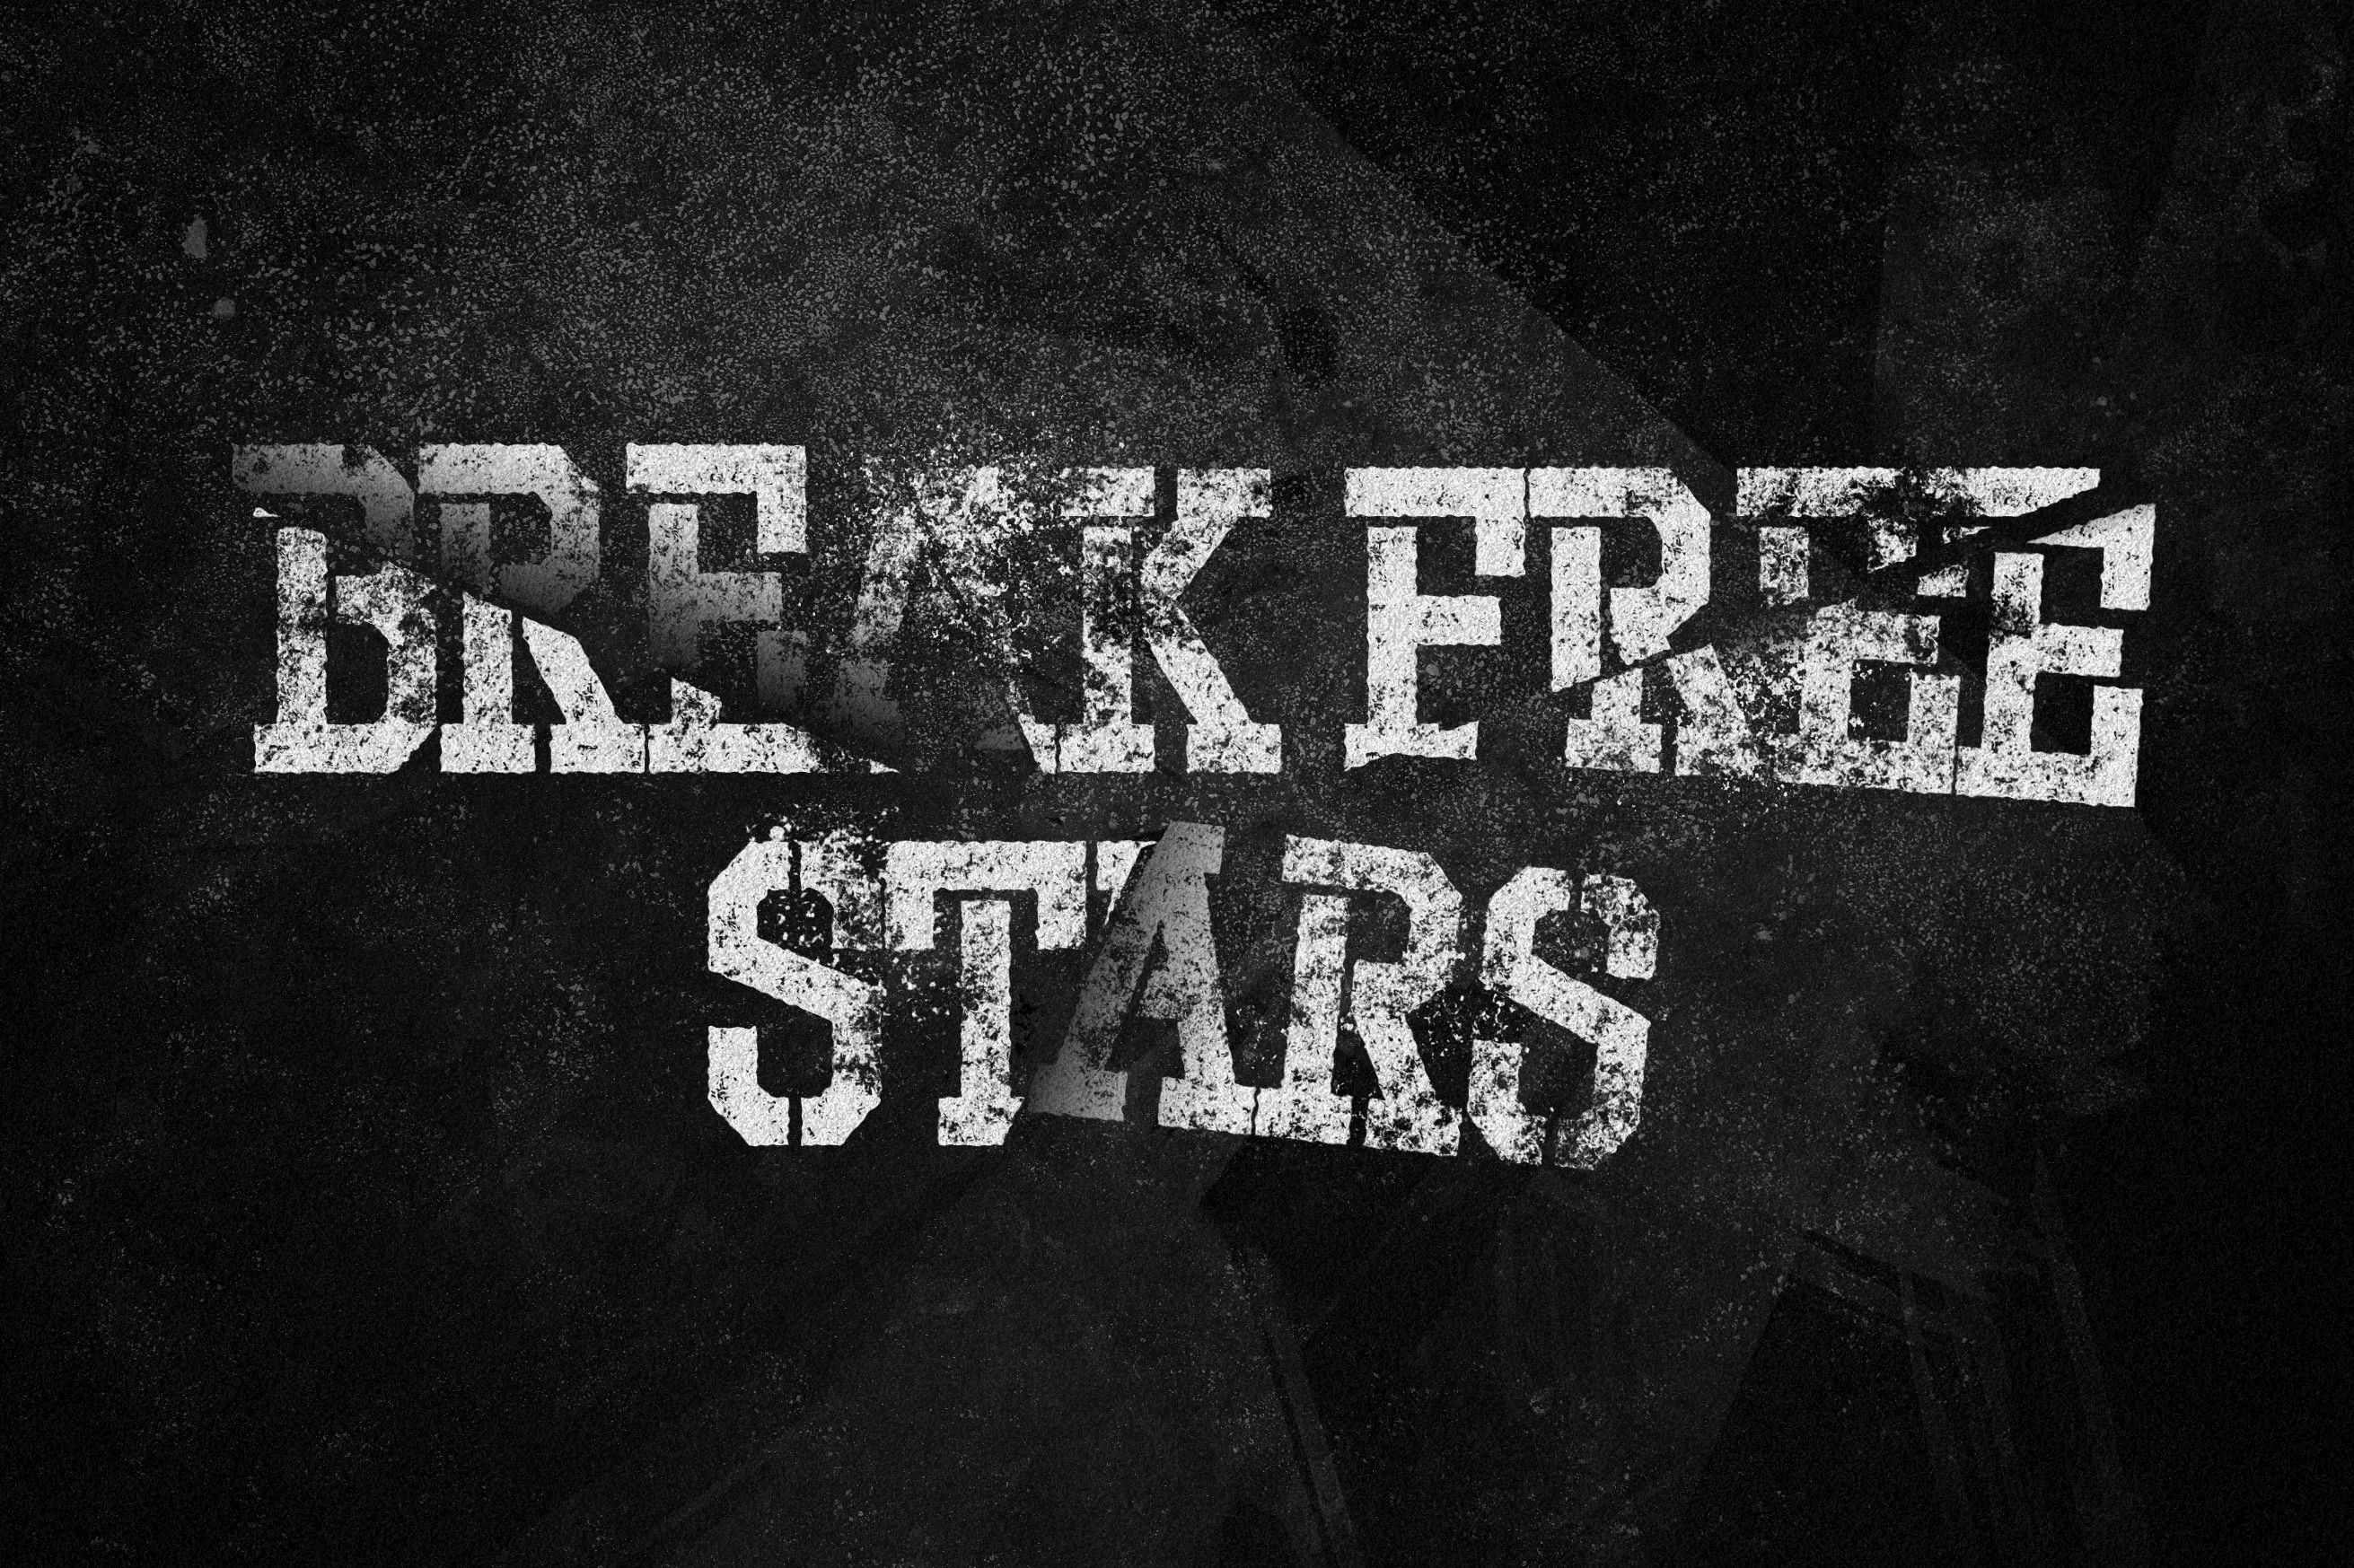 BREAK FREE STARS